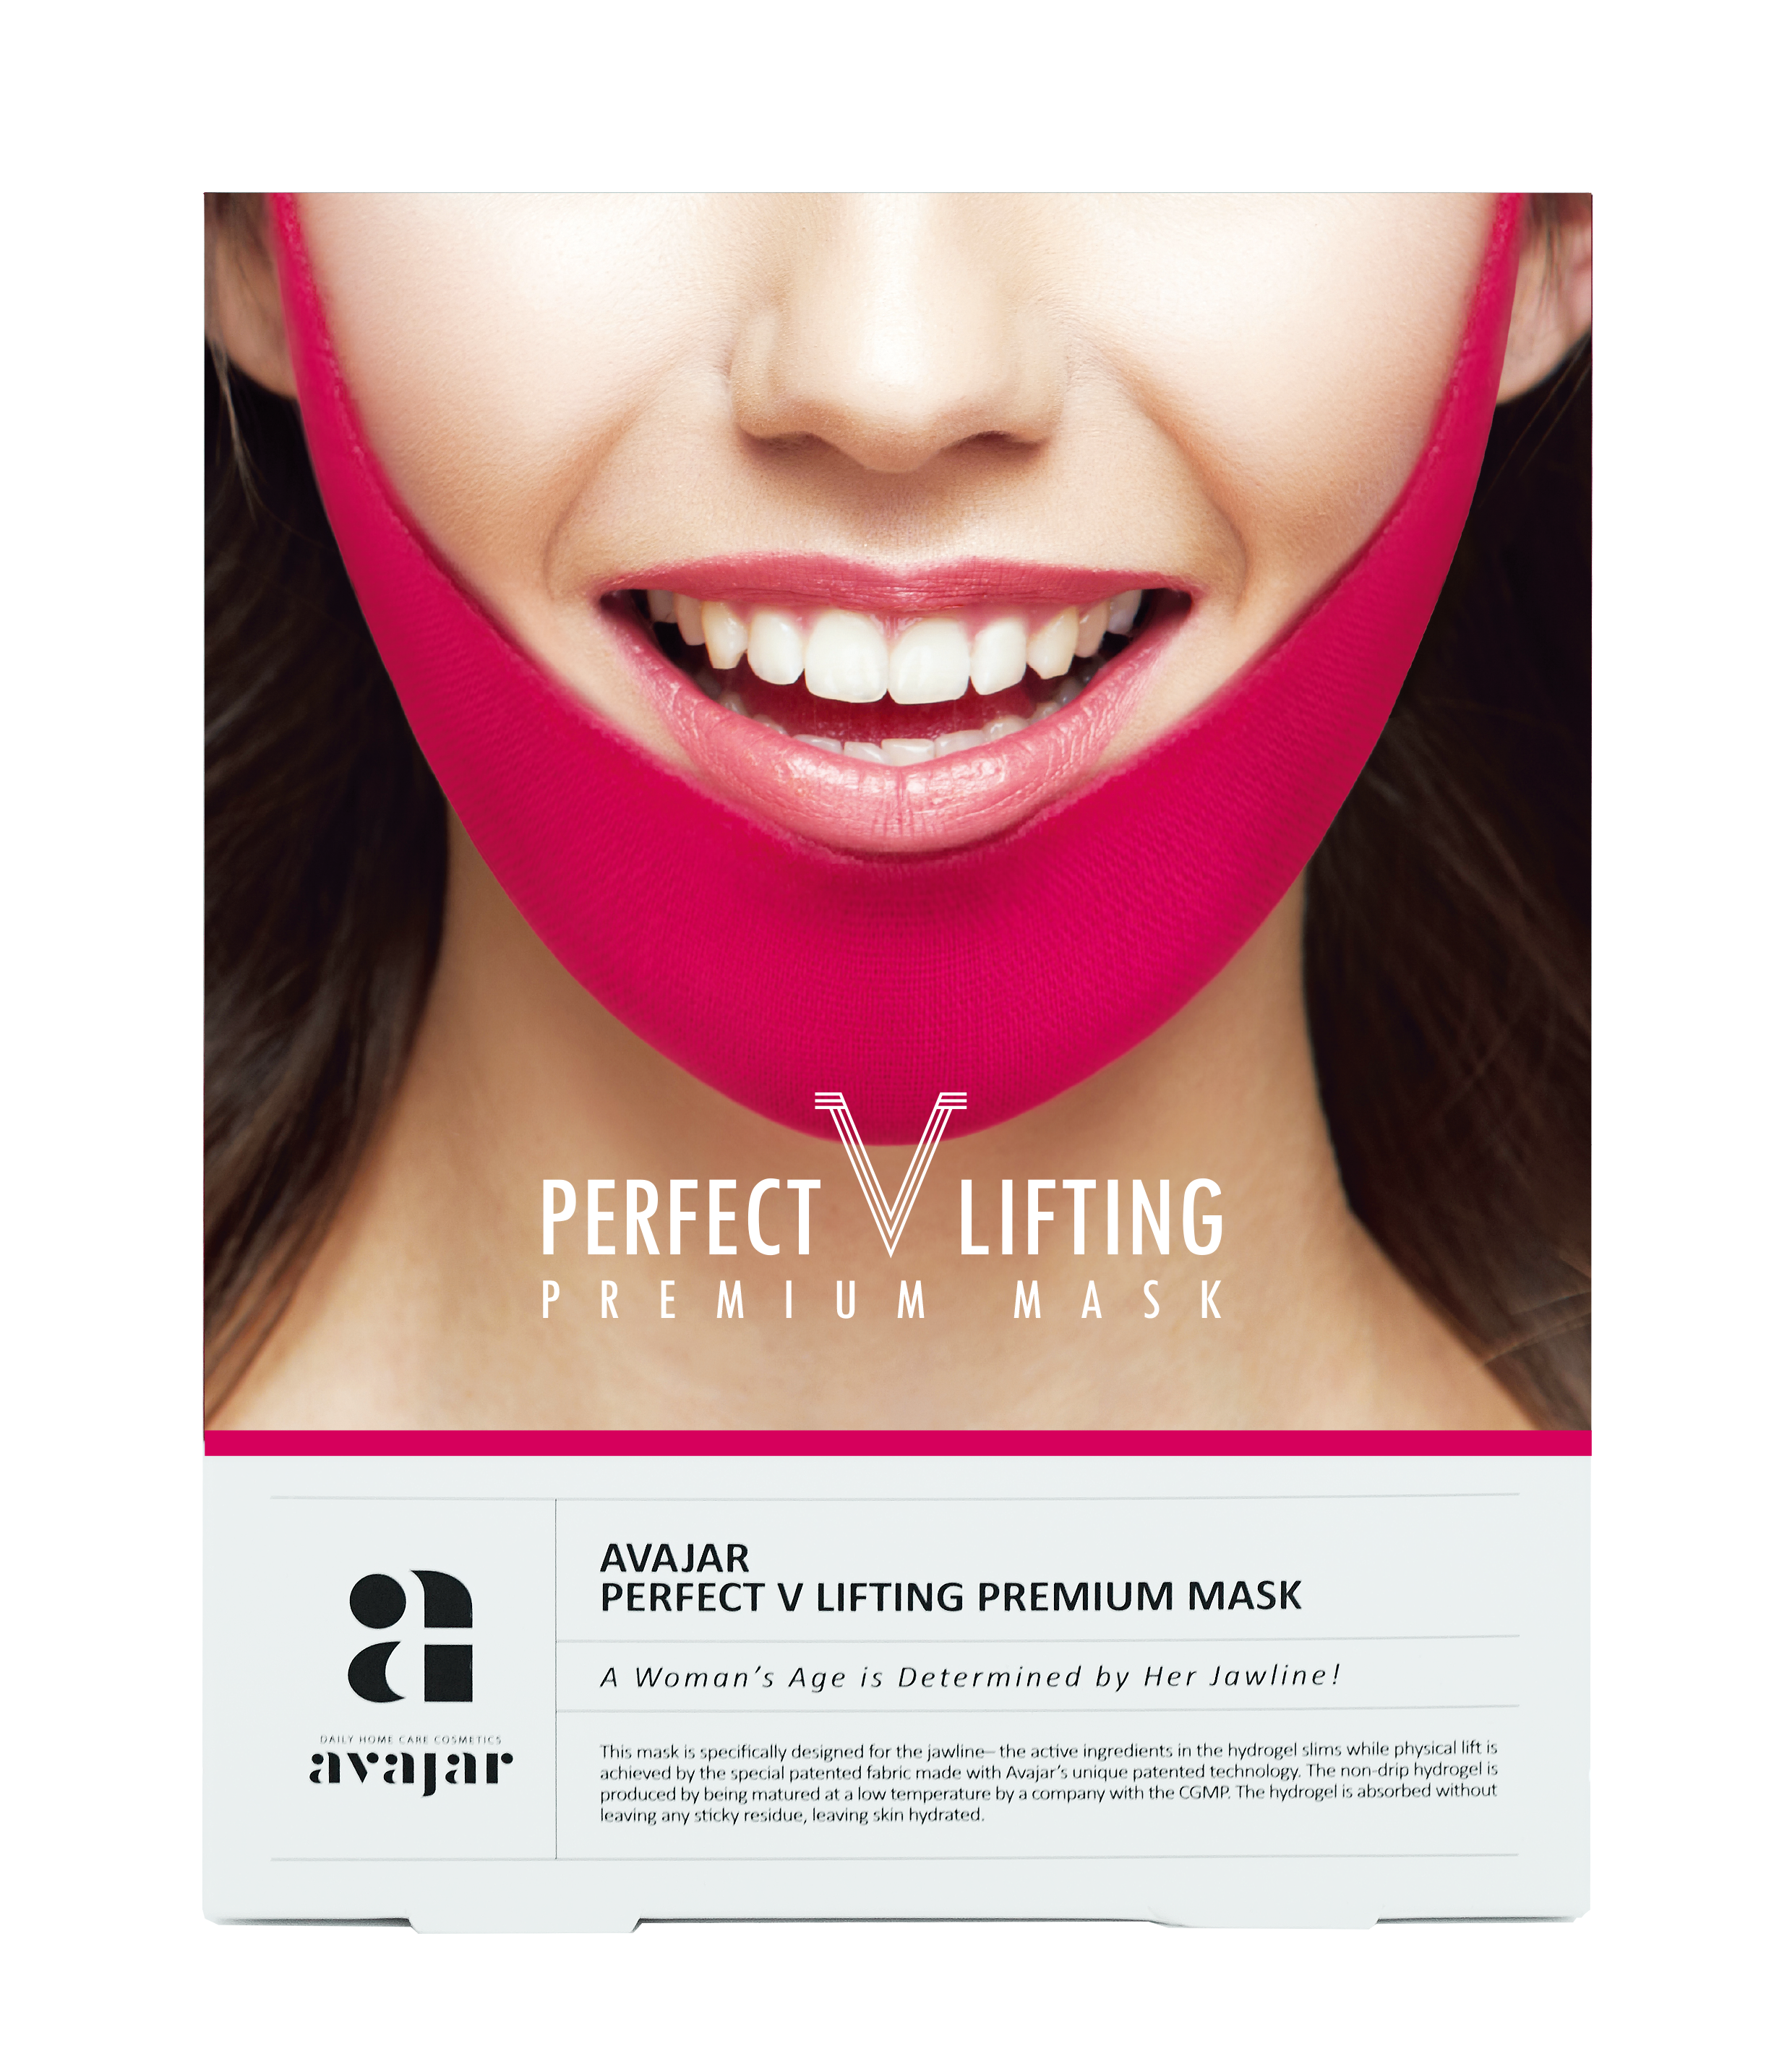 AVAJAR Perfect V LIFTING Premium Mask (5EA) - Dotrade Express. Trusted Korea Manufacturers. Find the best Korean Brands